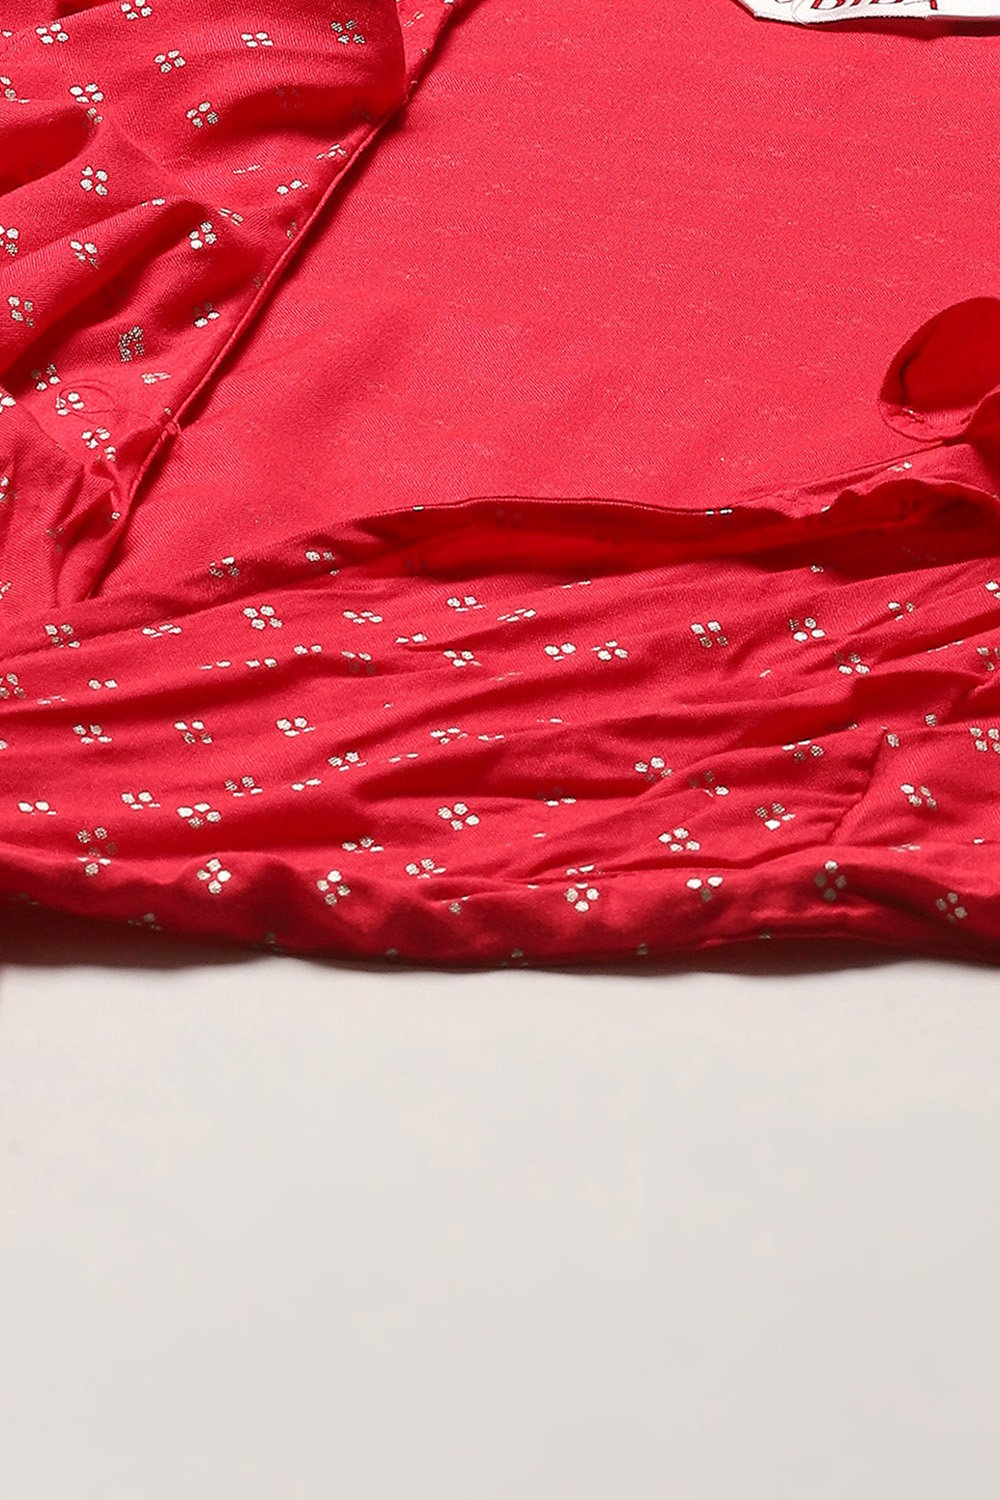 Buy Fuchsia Rayon Printed 2 Piece Set (Top, Skirt) for INR4995.00 ...